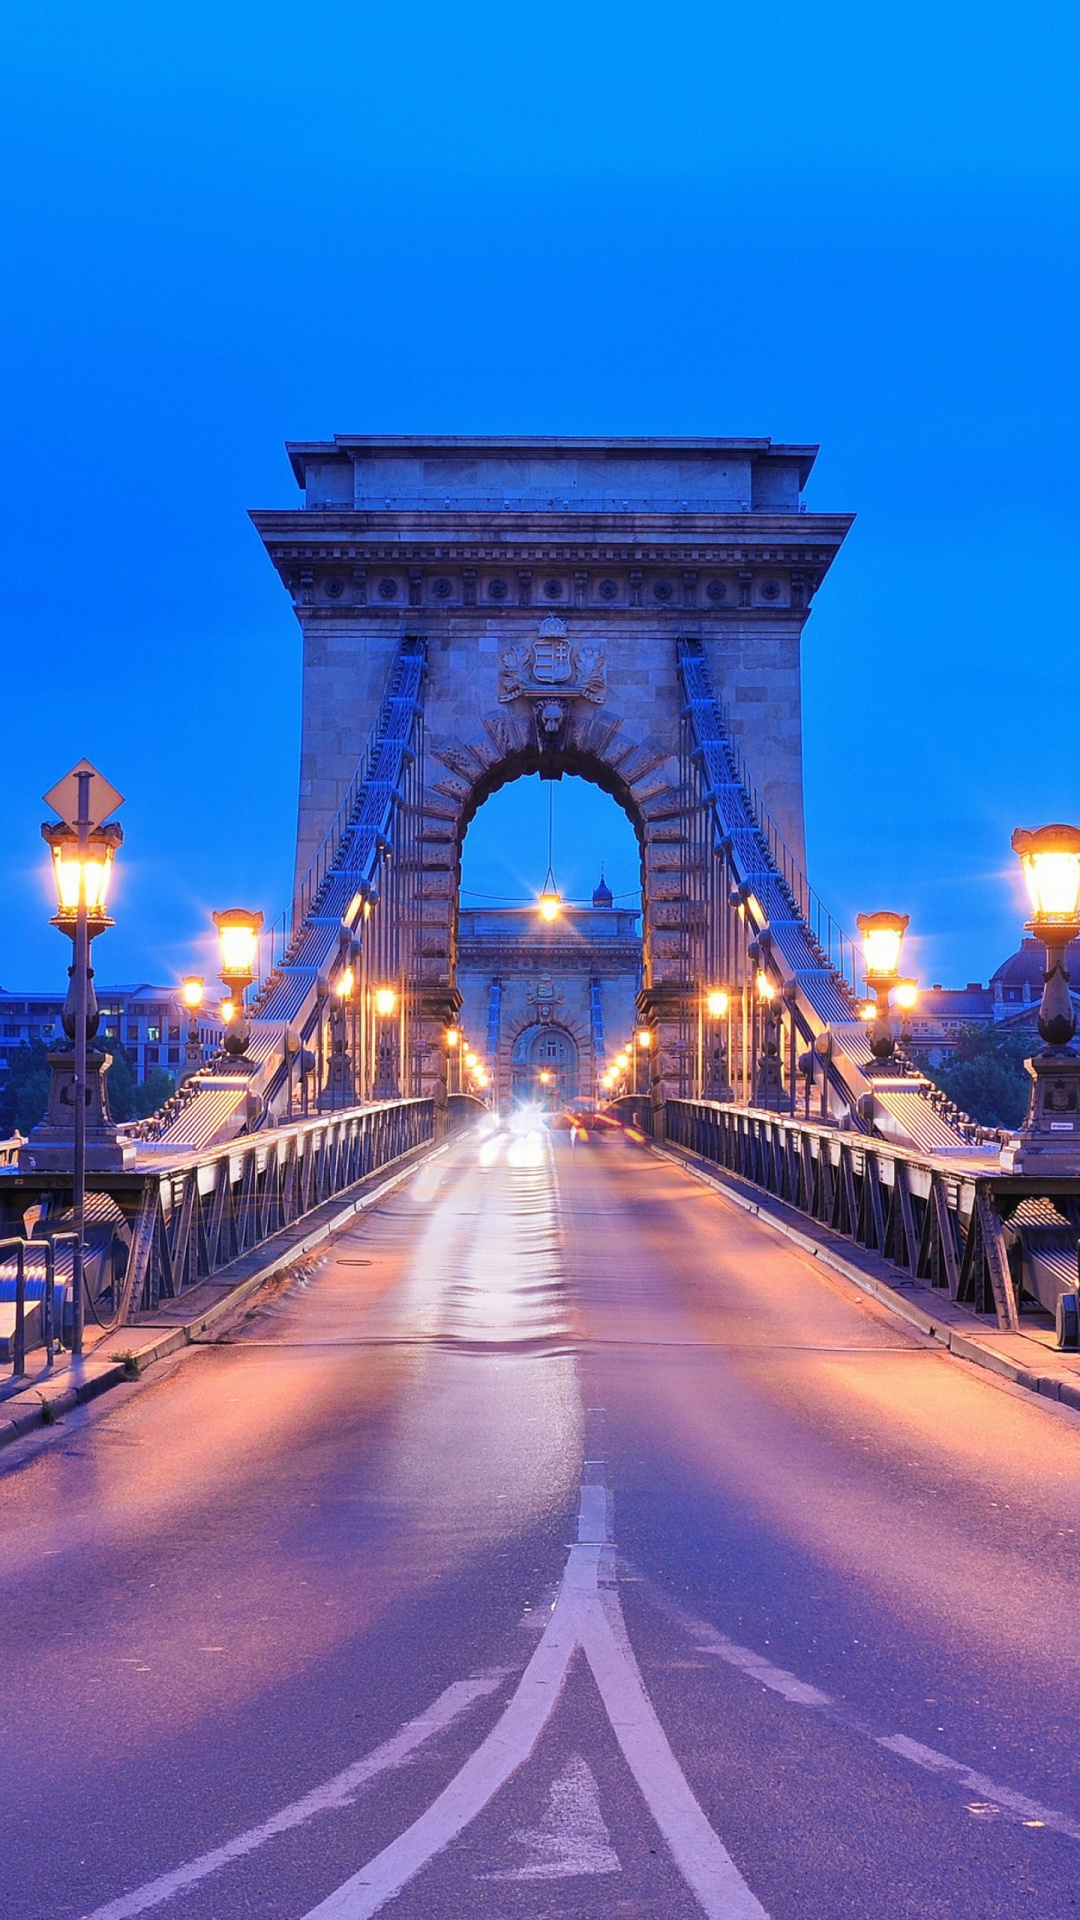 Das Budapest - Chain Bridge Wallpaper 1080x1920